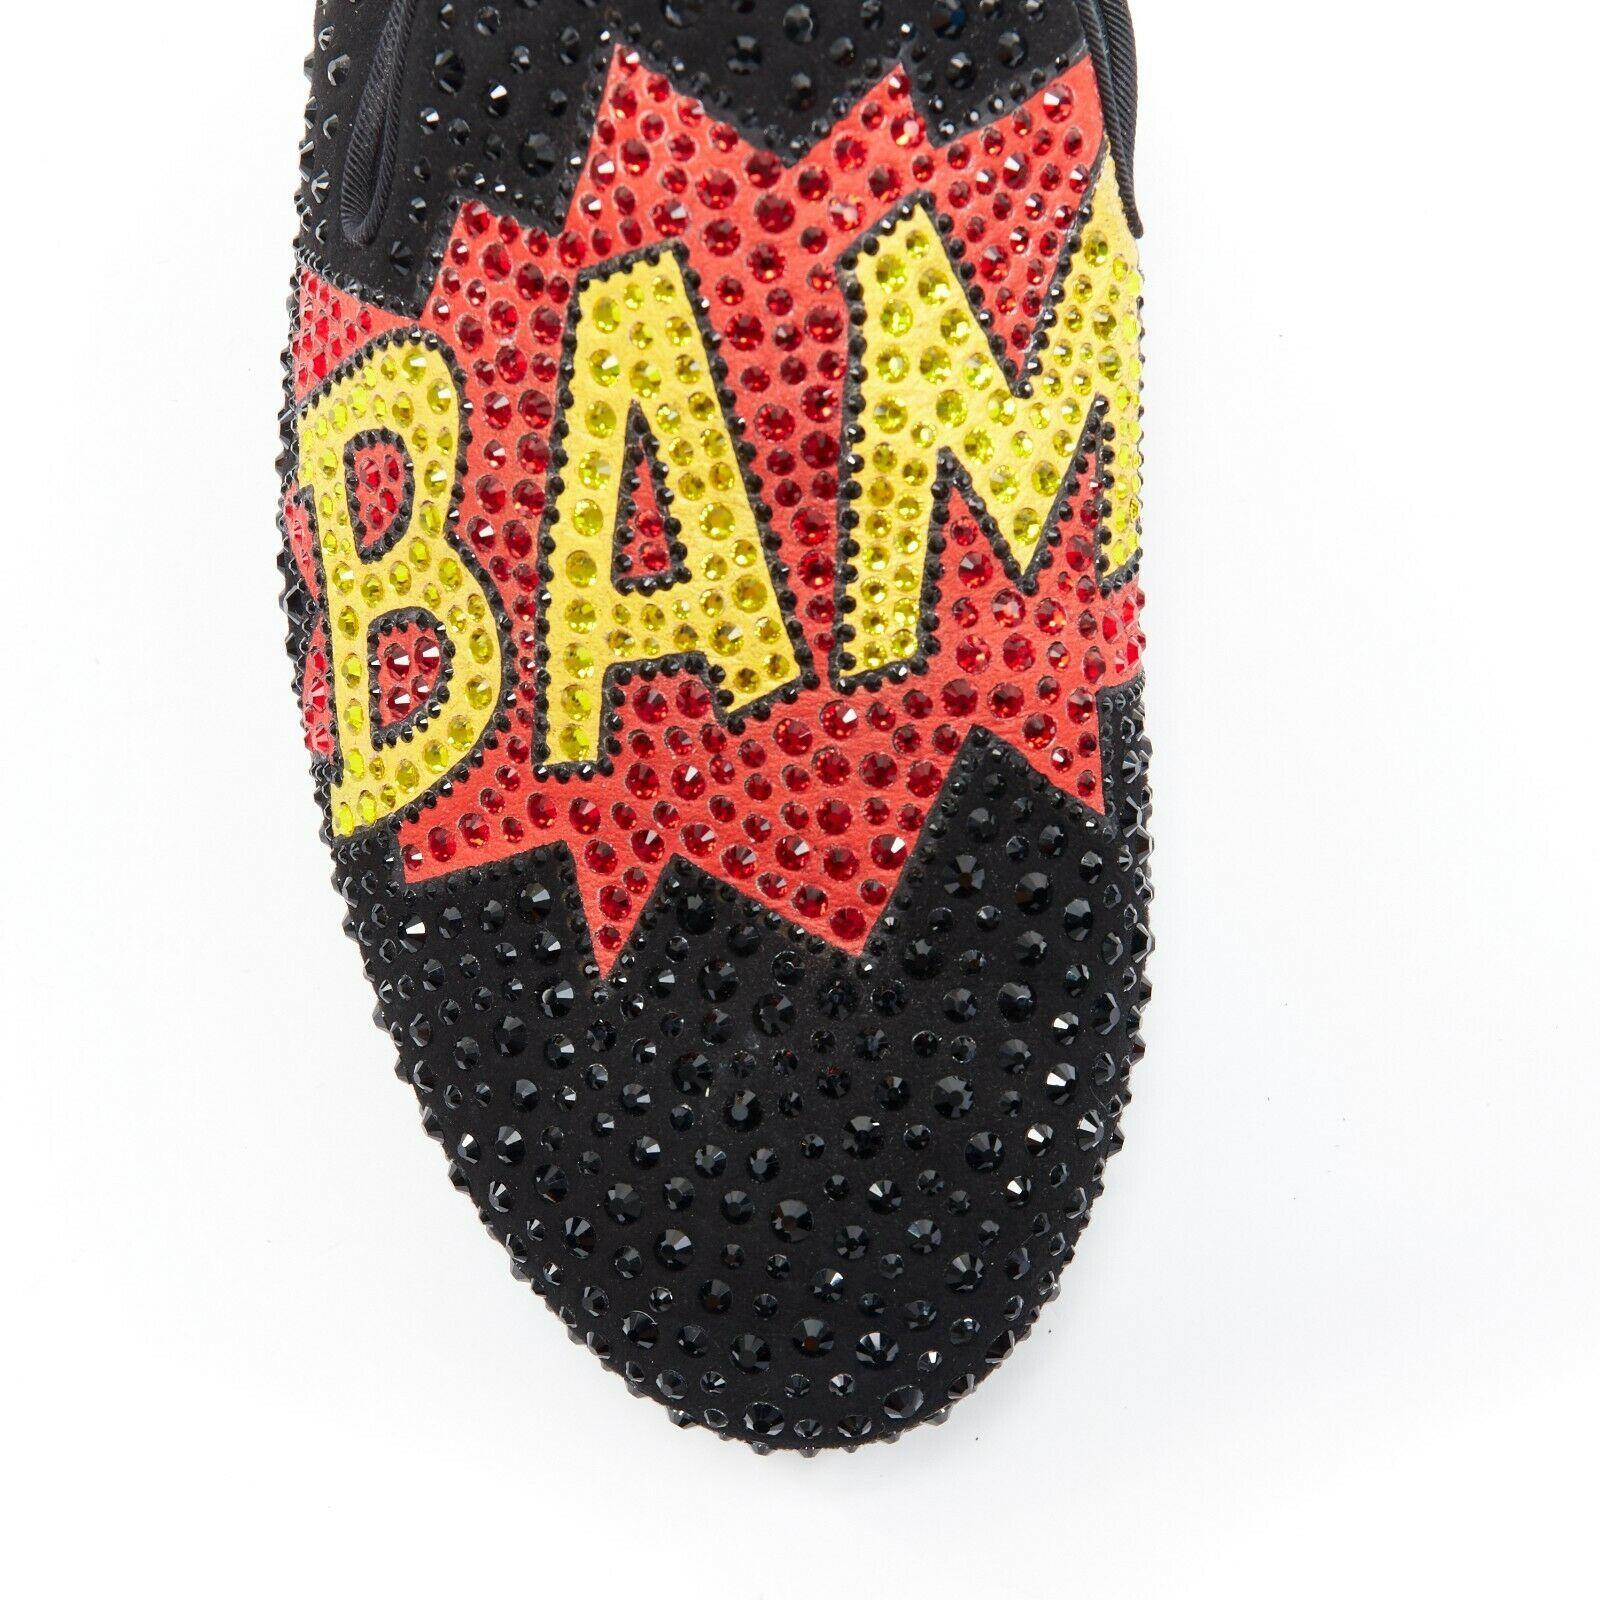 GIUSEPPE ZANOTTI 2019 Bam crystal embellished pop art black suede loafer EU44 2